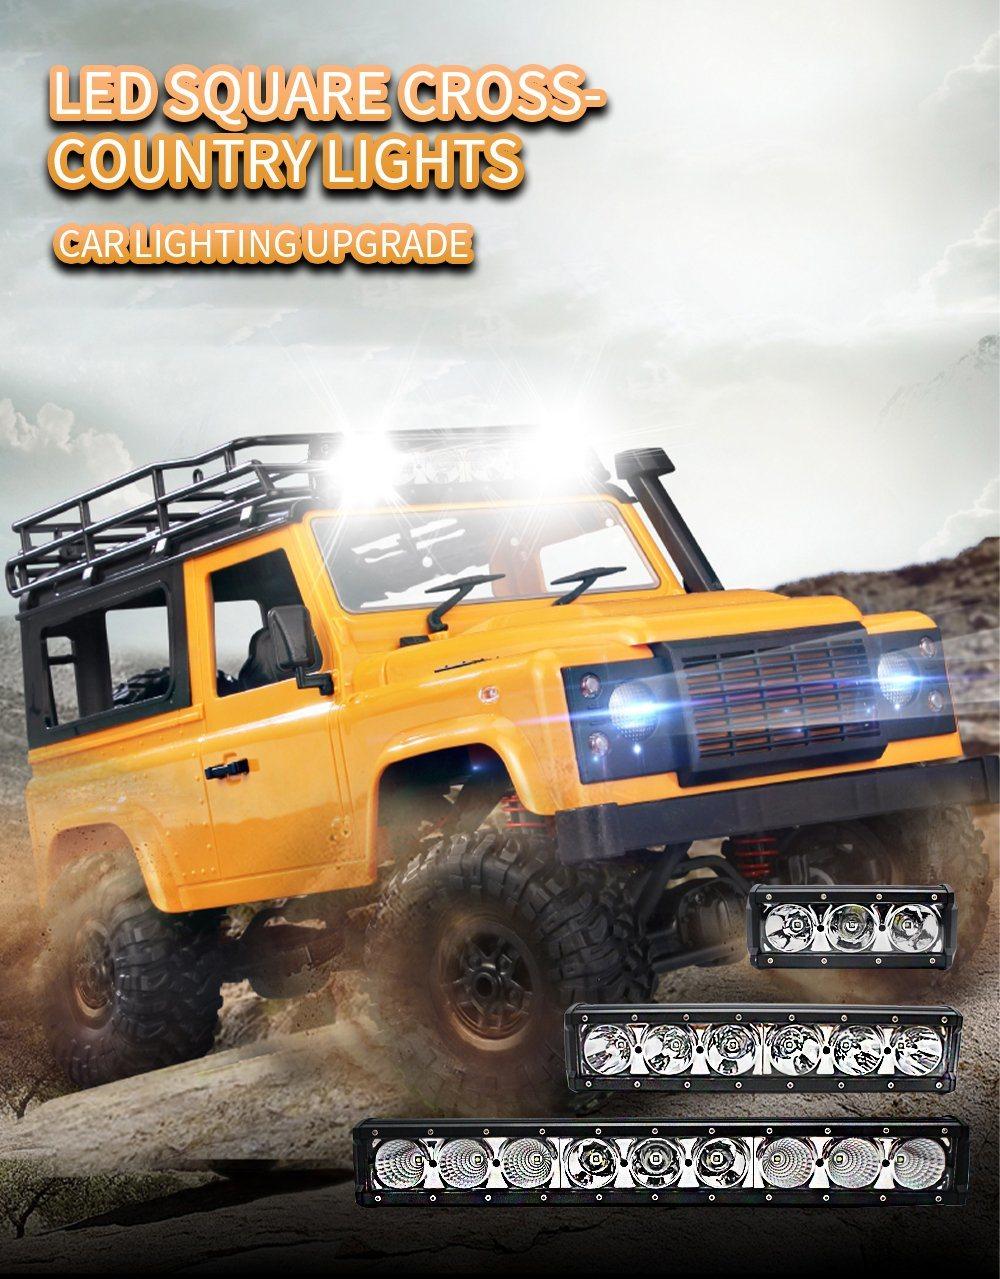 12V LED Light Work30W 60W 90W 120W 150W LED Light Bar for 4X4 Offroad Truck